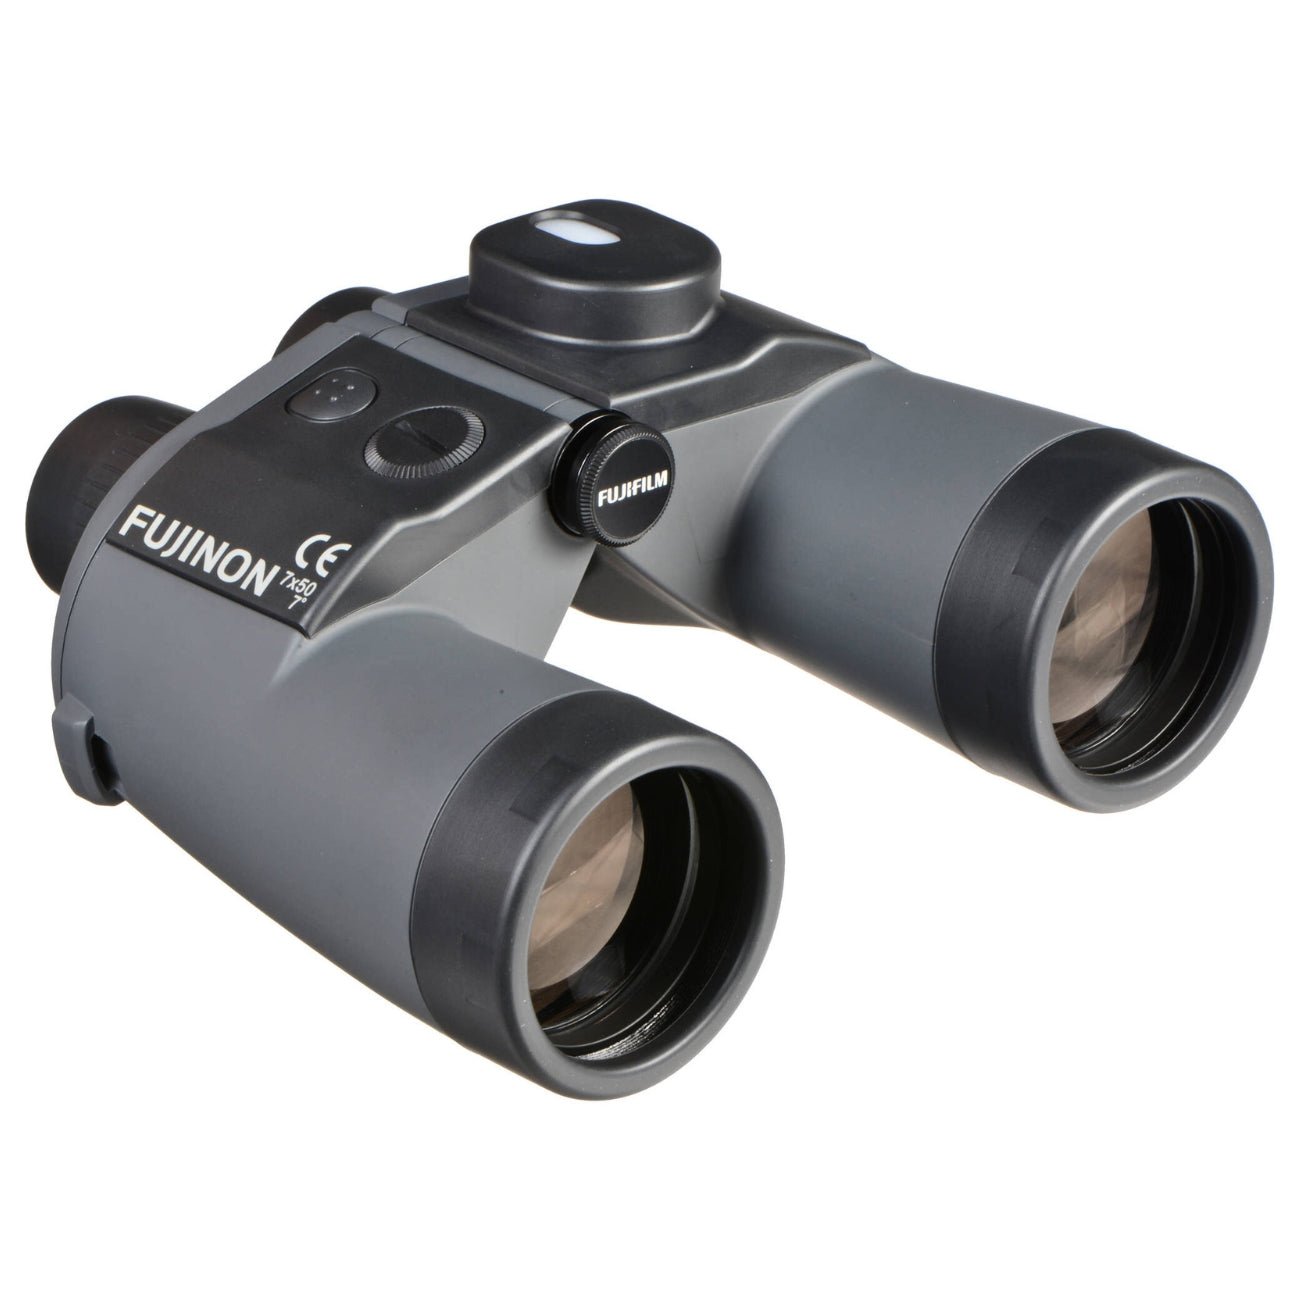 Fujinon 7x50 WPC-XL Mariner Binoculars with Compass / fujinon marine binoculars, fujinon 7x50 binoculars with compass, 7 50 binoculars